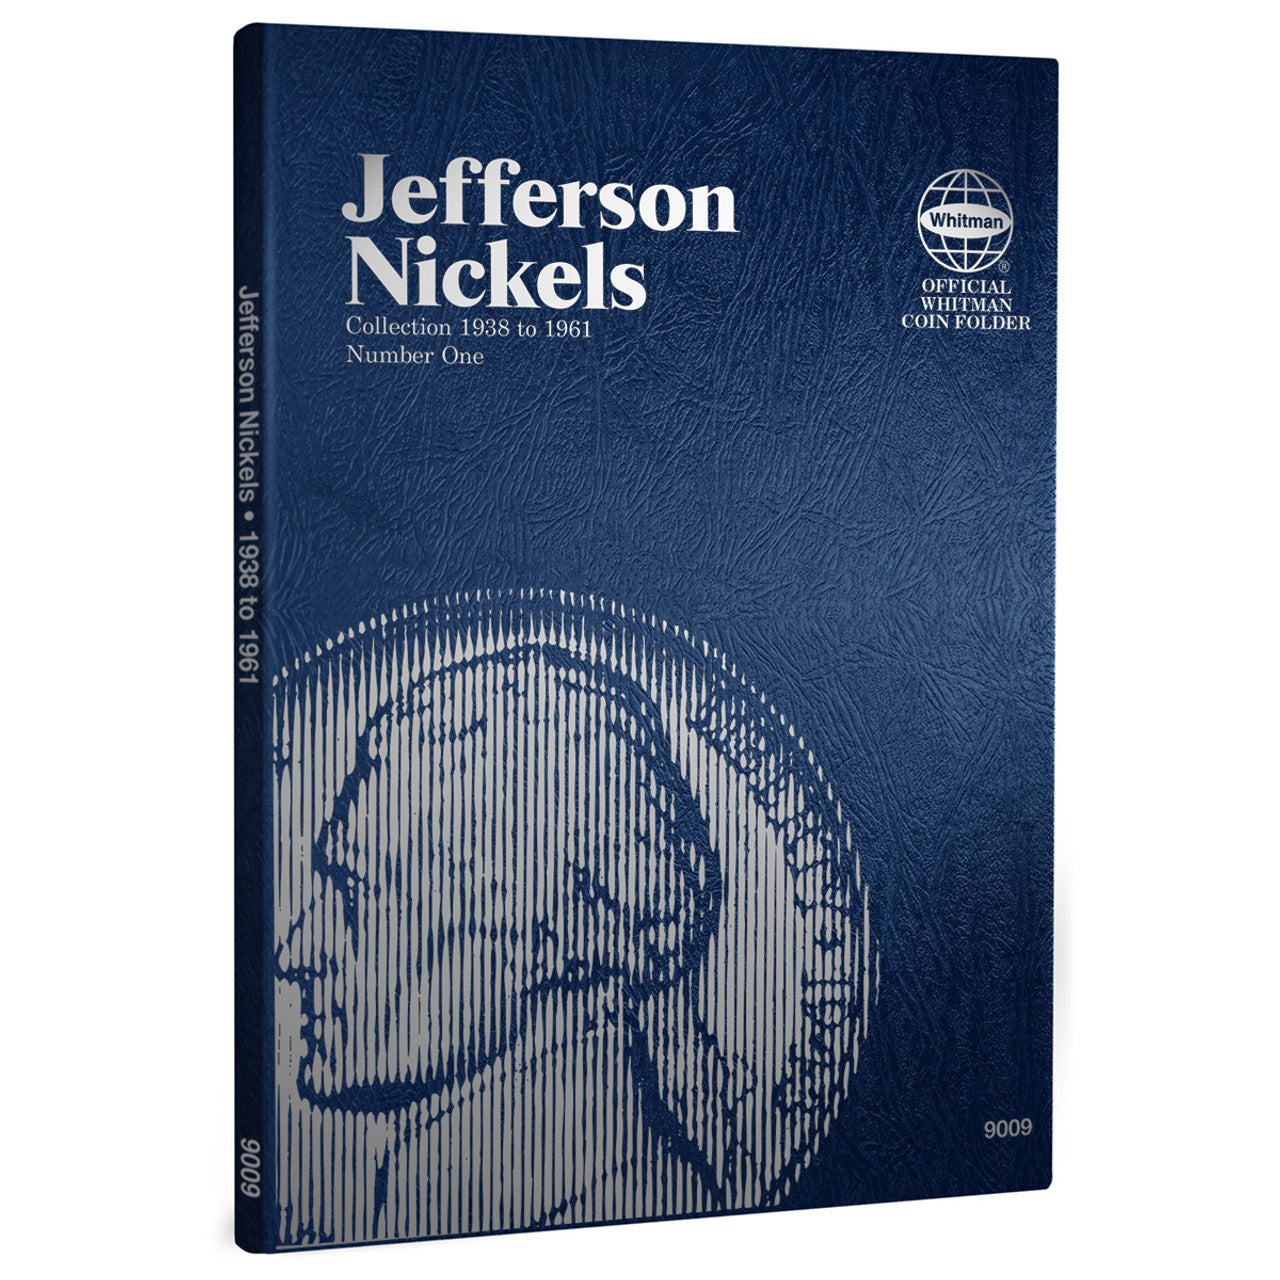 Whitman Coin Folder - Jefferson Nickel#1 1938-1961